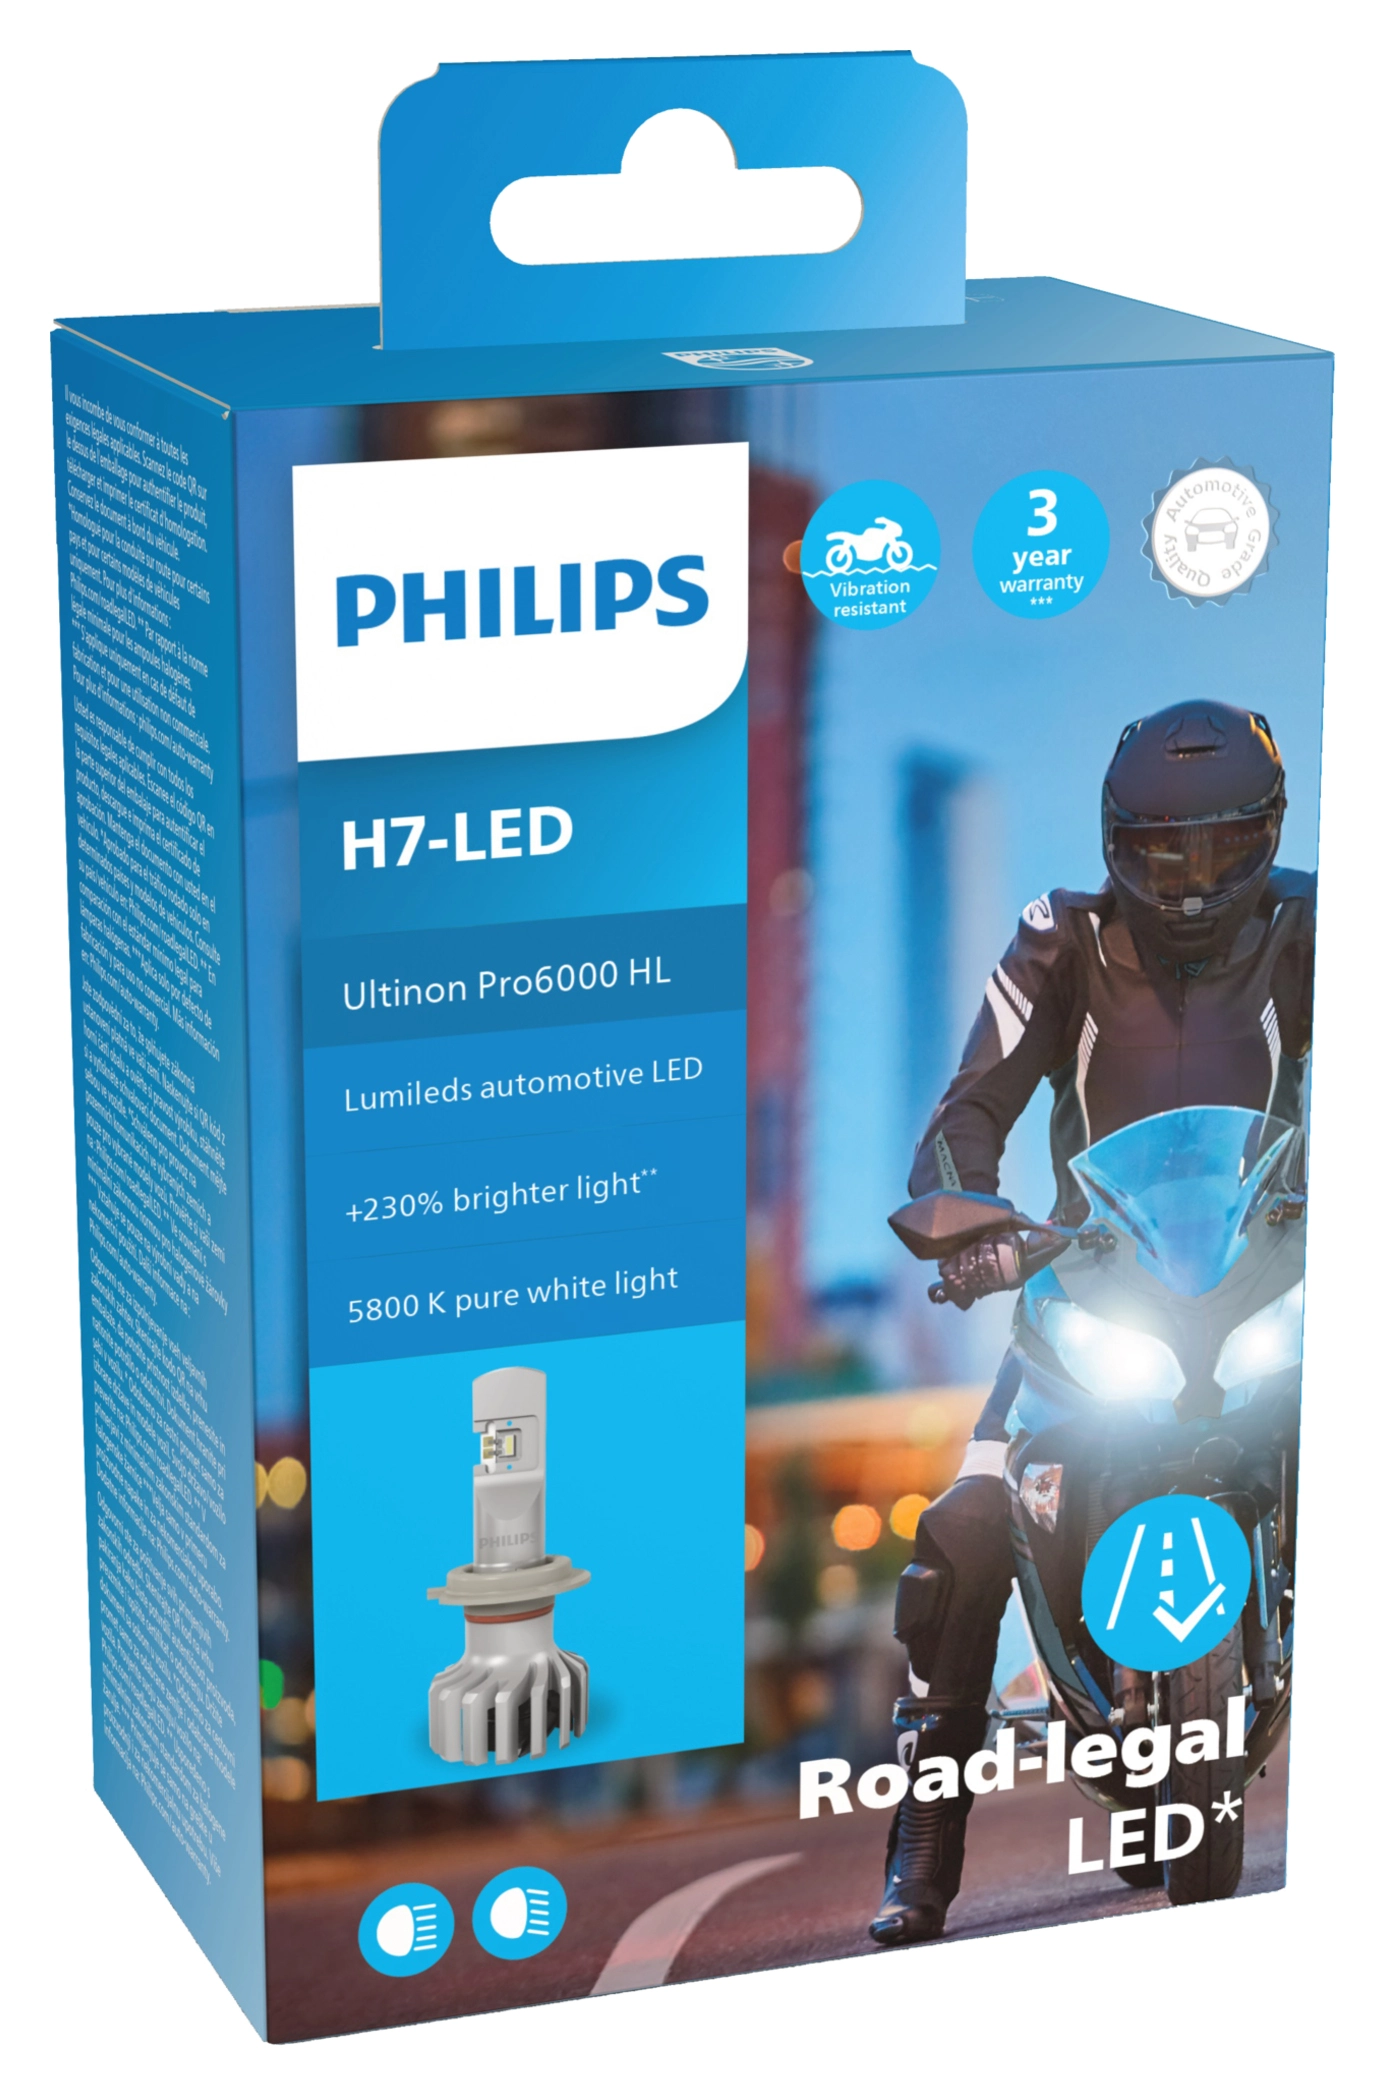 Philips LED H7-LED Ultinon Pro6000 CZ Homologace - LED Car Bulb